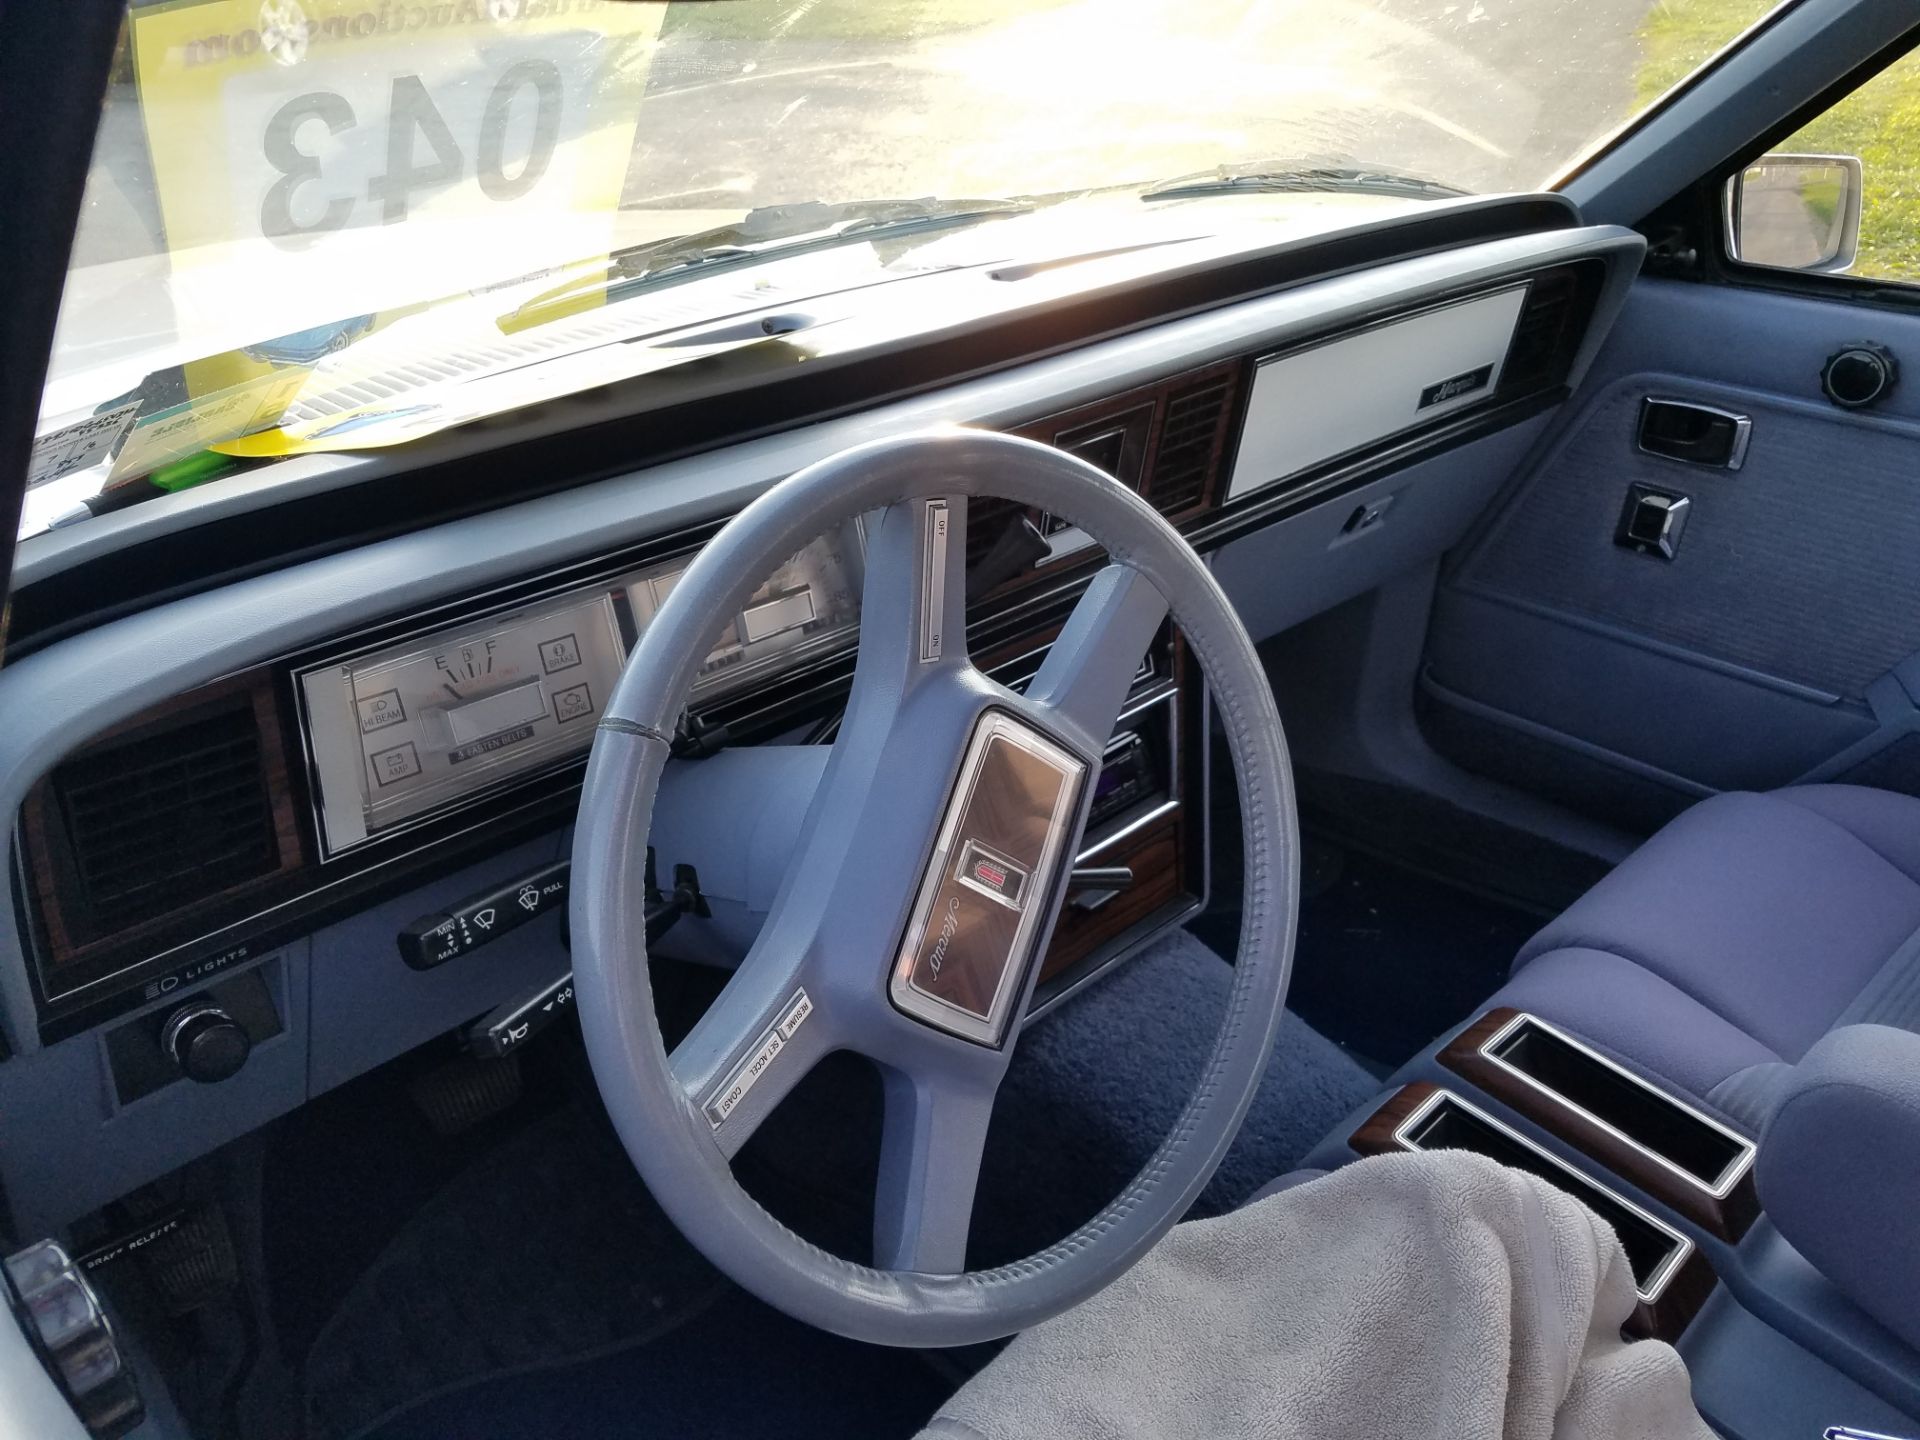 1983 Mercury 4 door sedan - Image 6 of 7